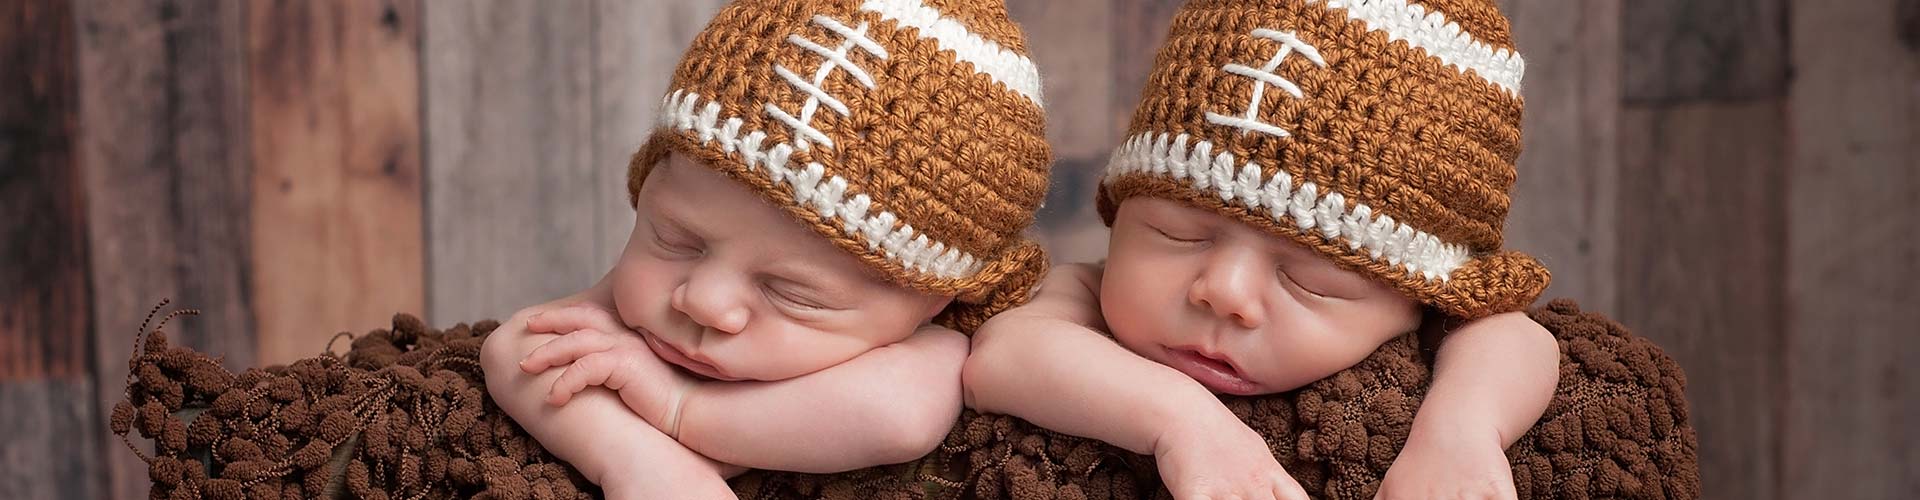 Twin baby boys wearing football shapeds hats.